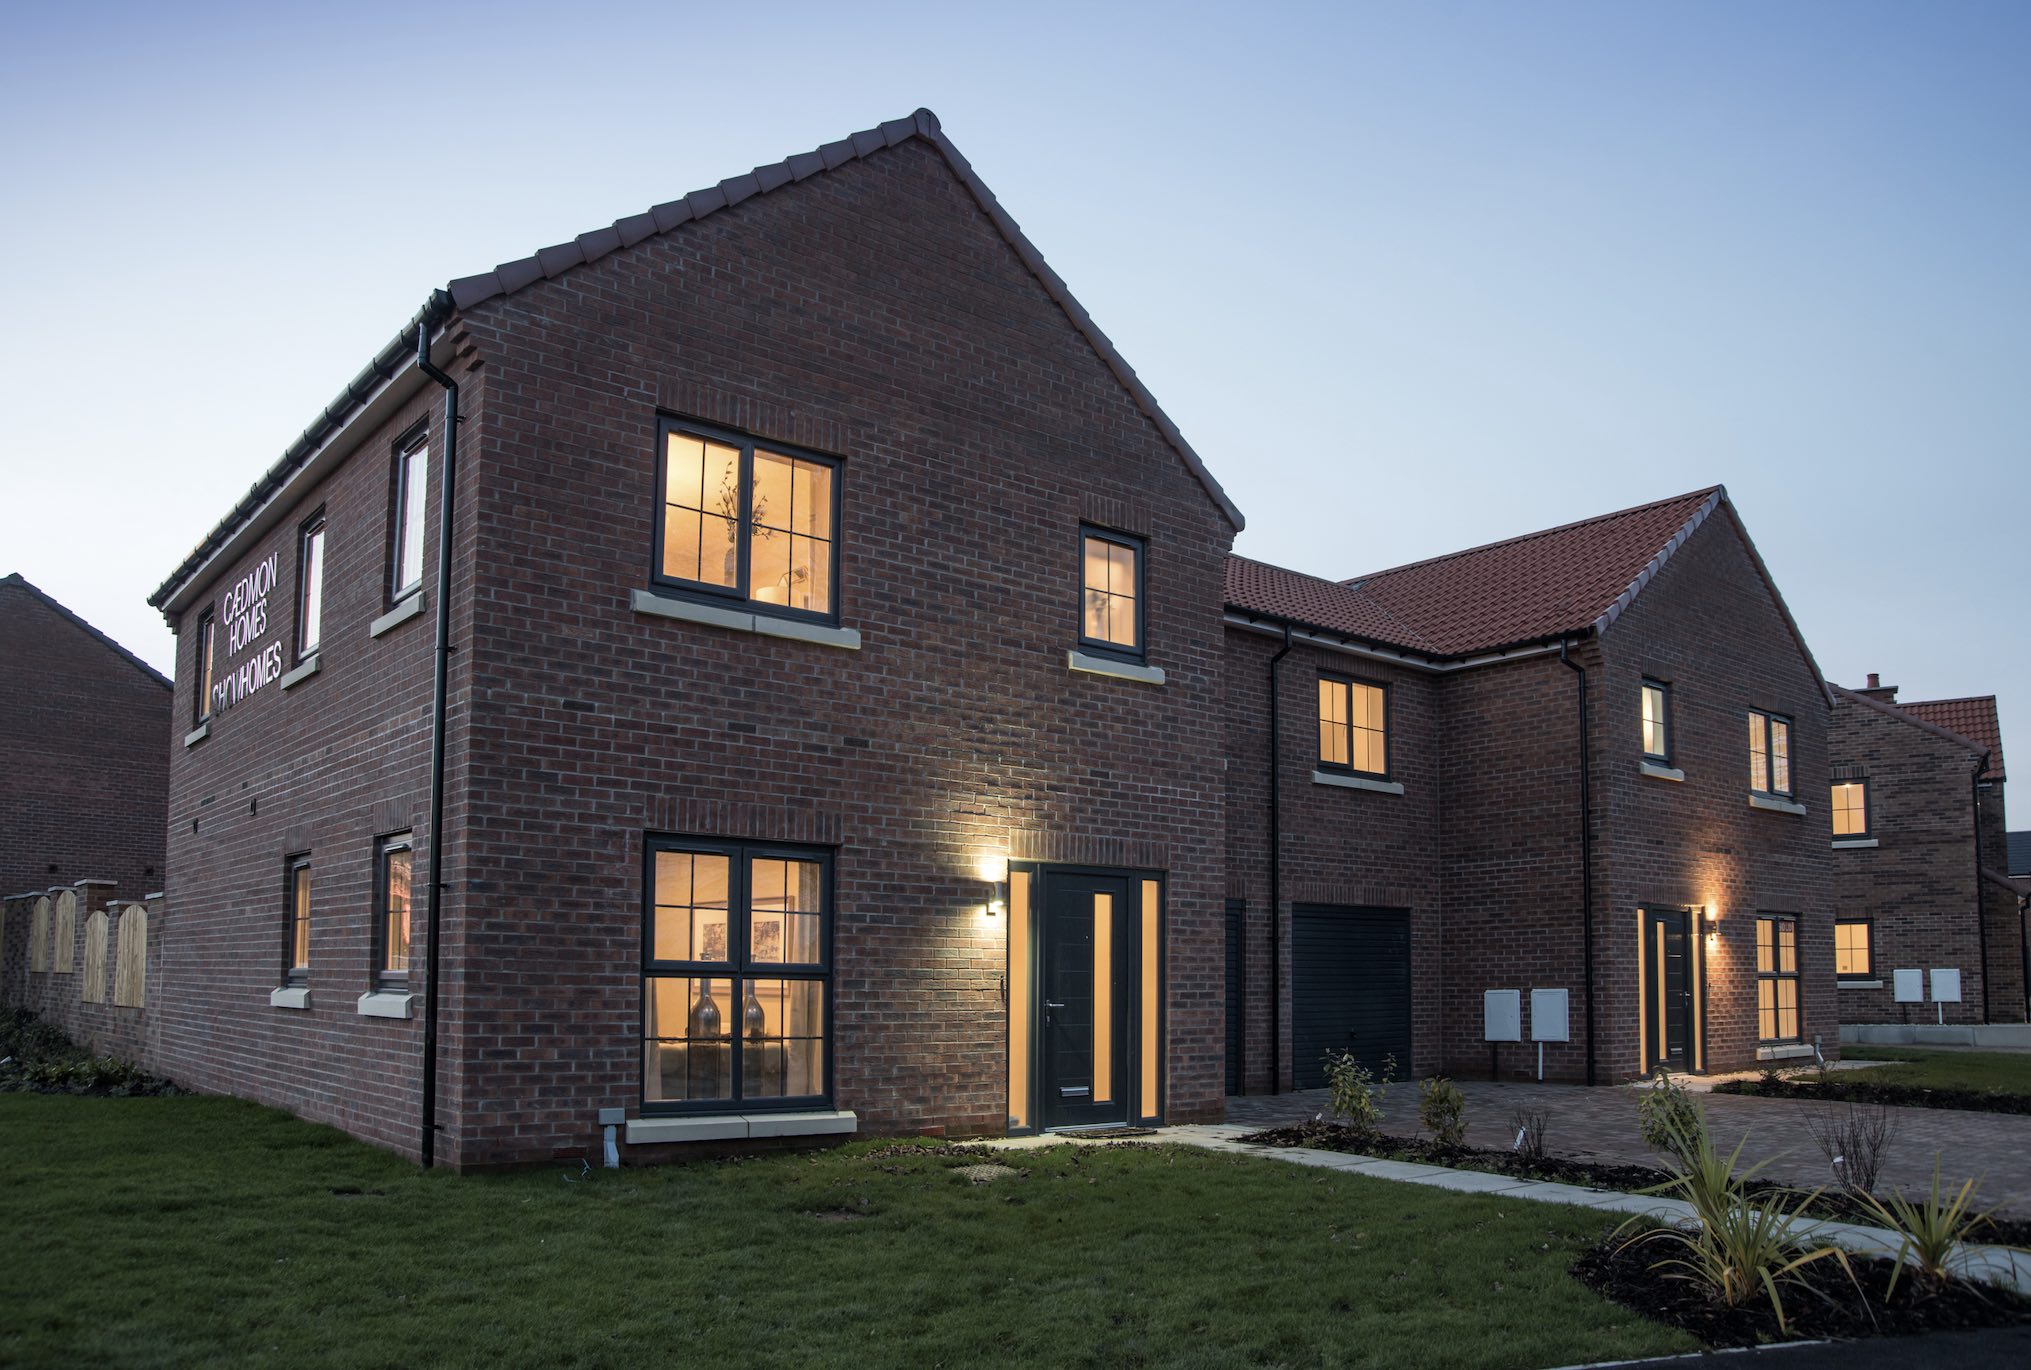 Priory Meadows - new housing development in Boroughbridge